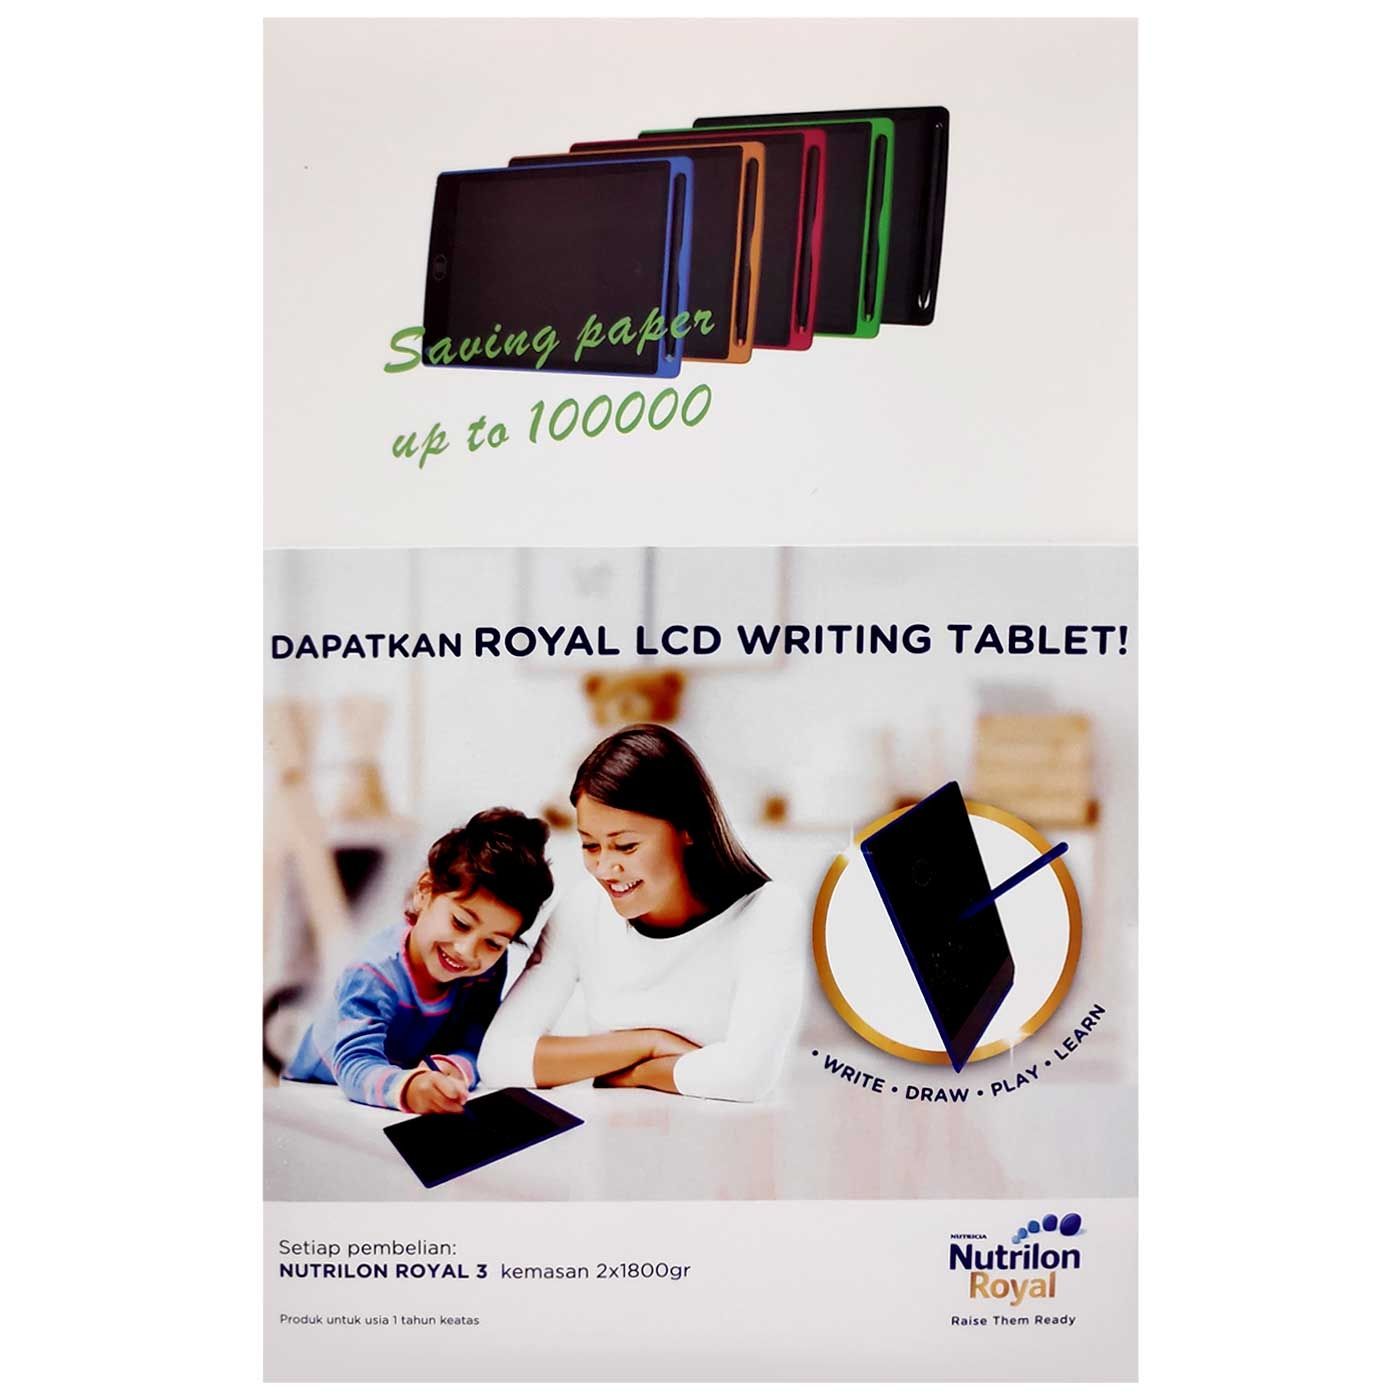 Free Royal LCD Writing Tablet - 3